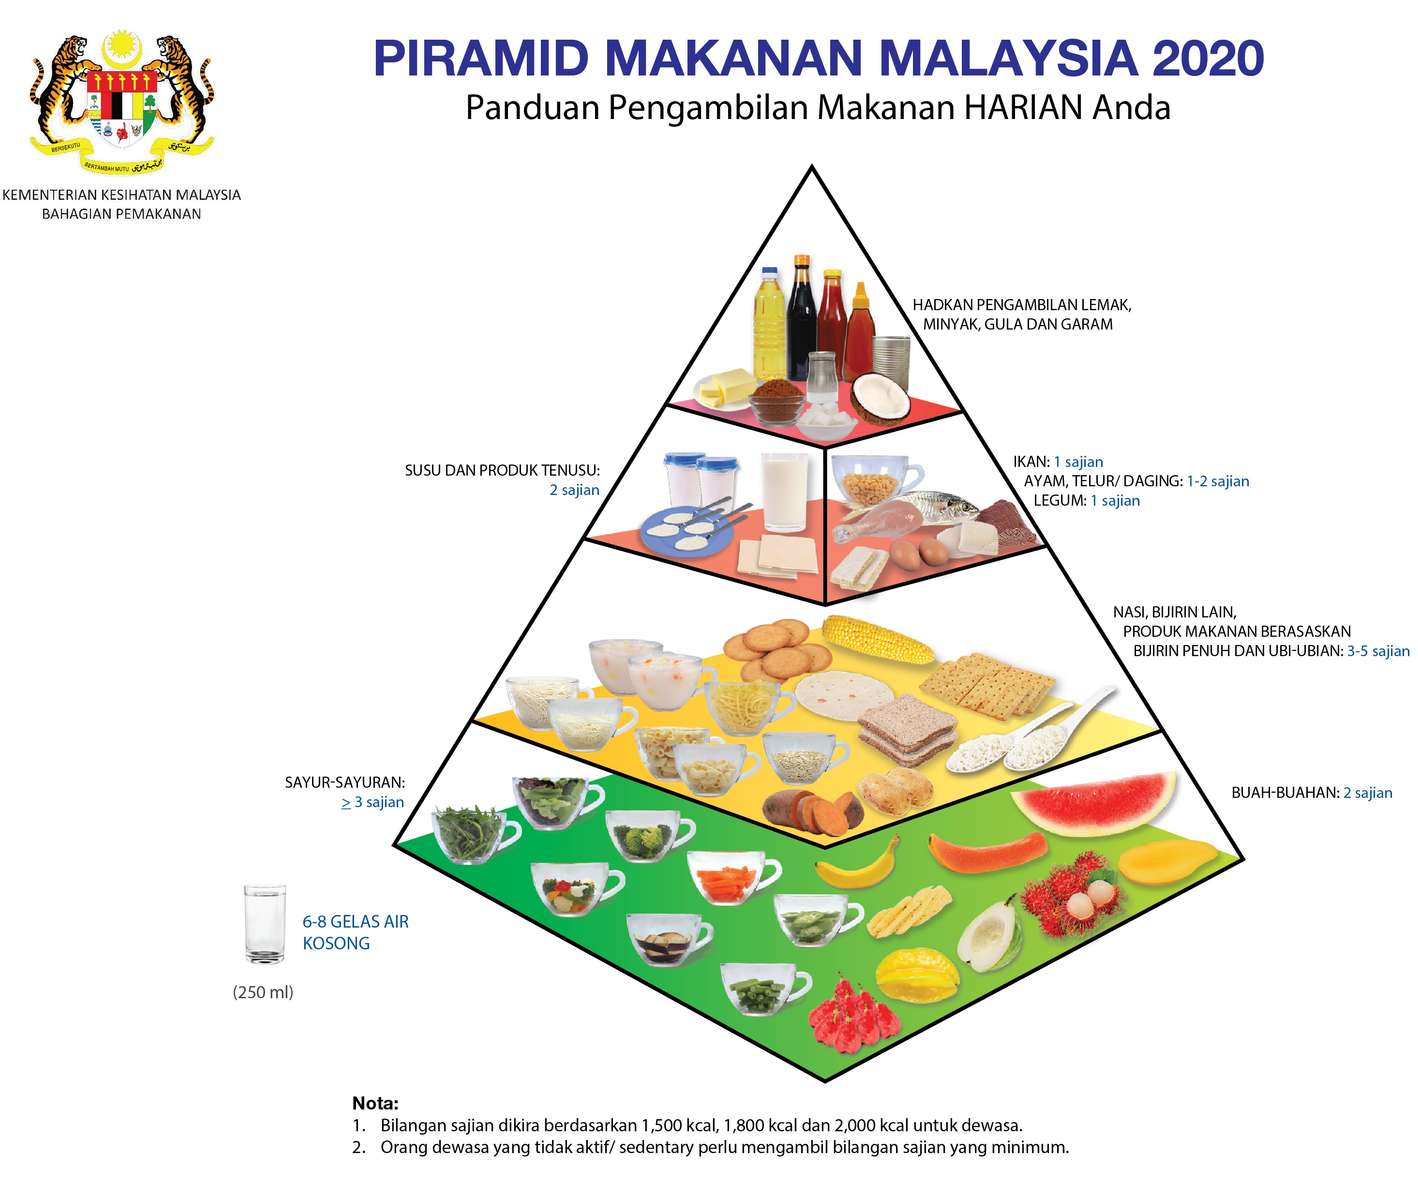 Pyramide Makanan Online-Puzzle vom Foto